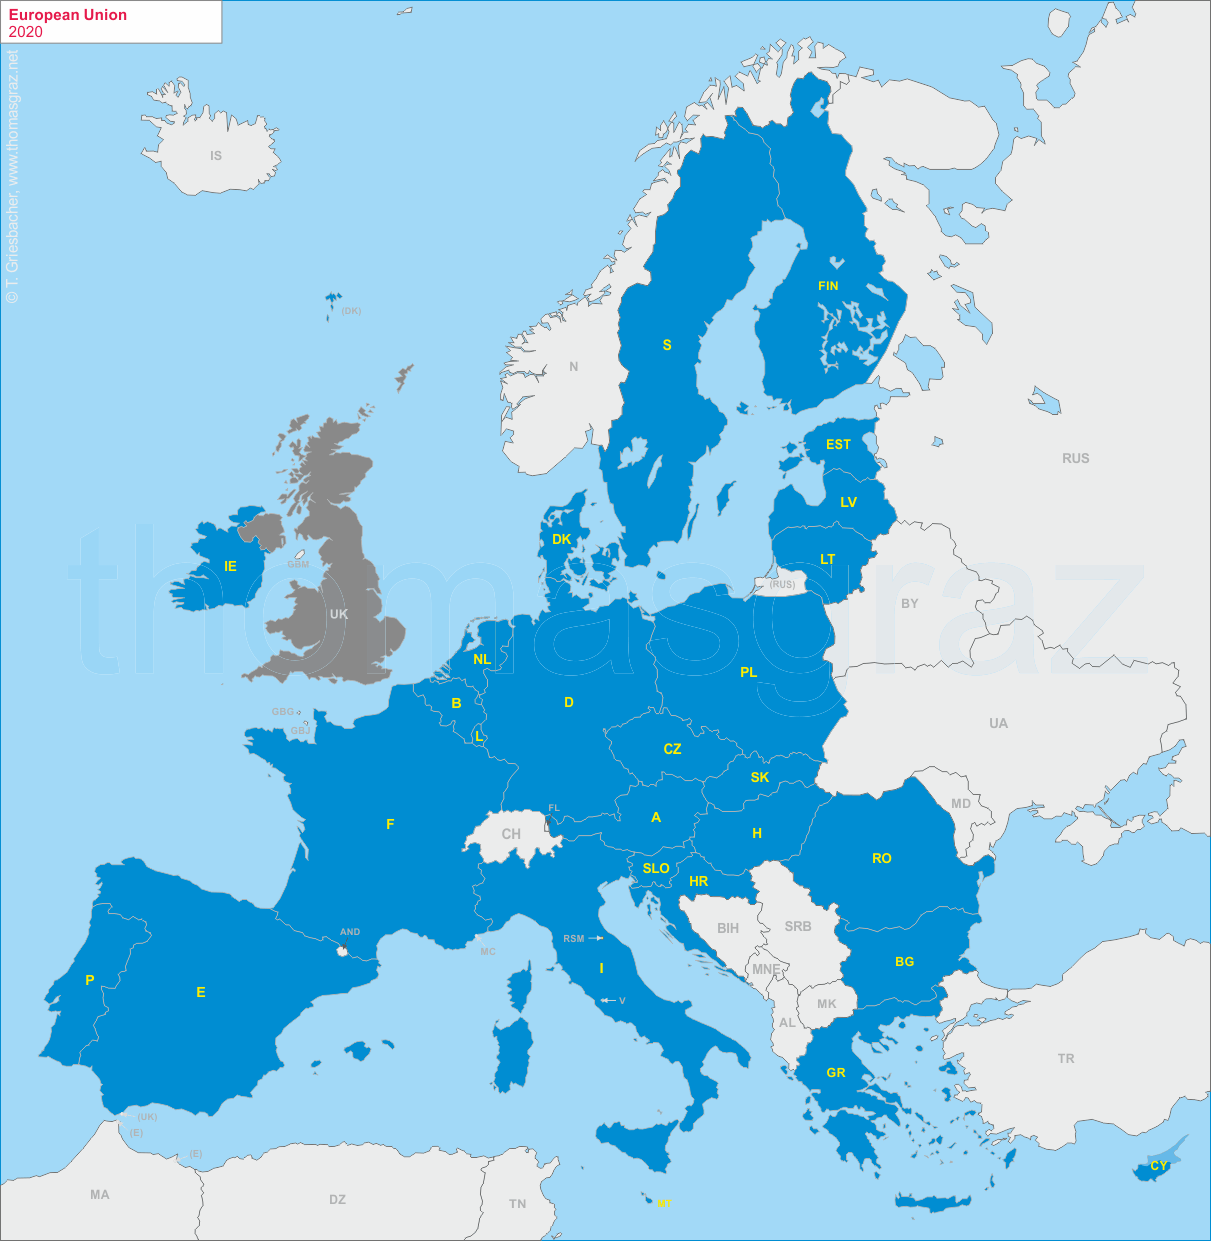 map of European Union 2020